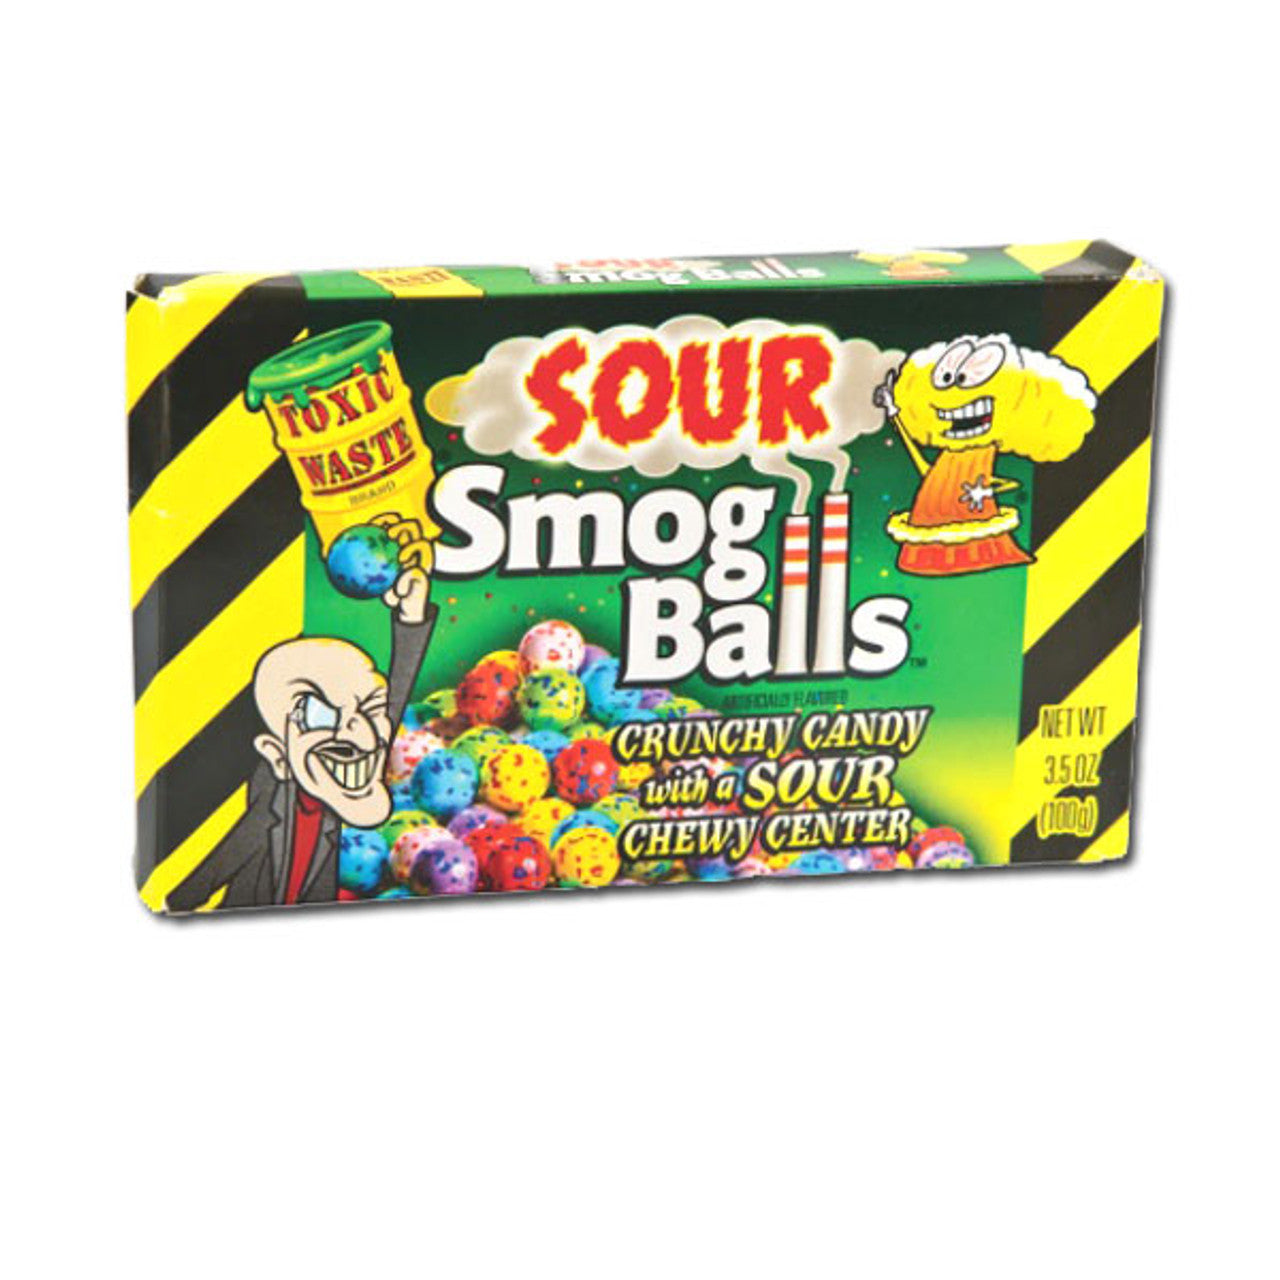 Sour Smog Balls 3.5oz Box